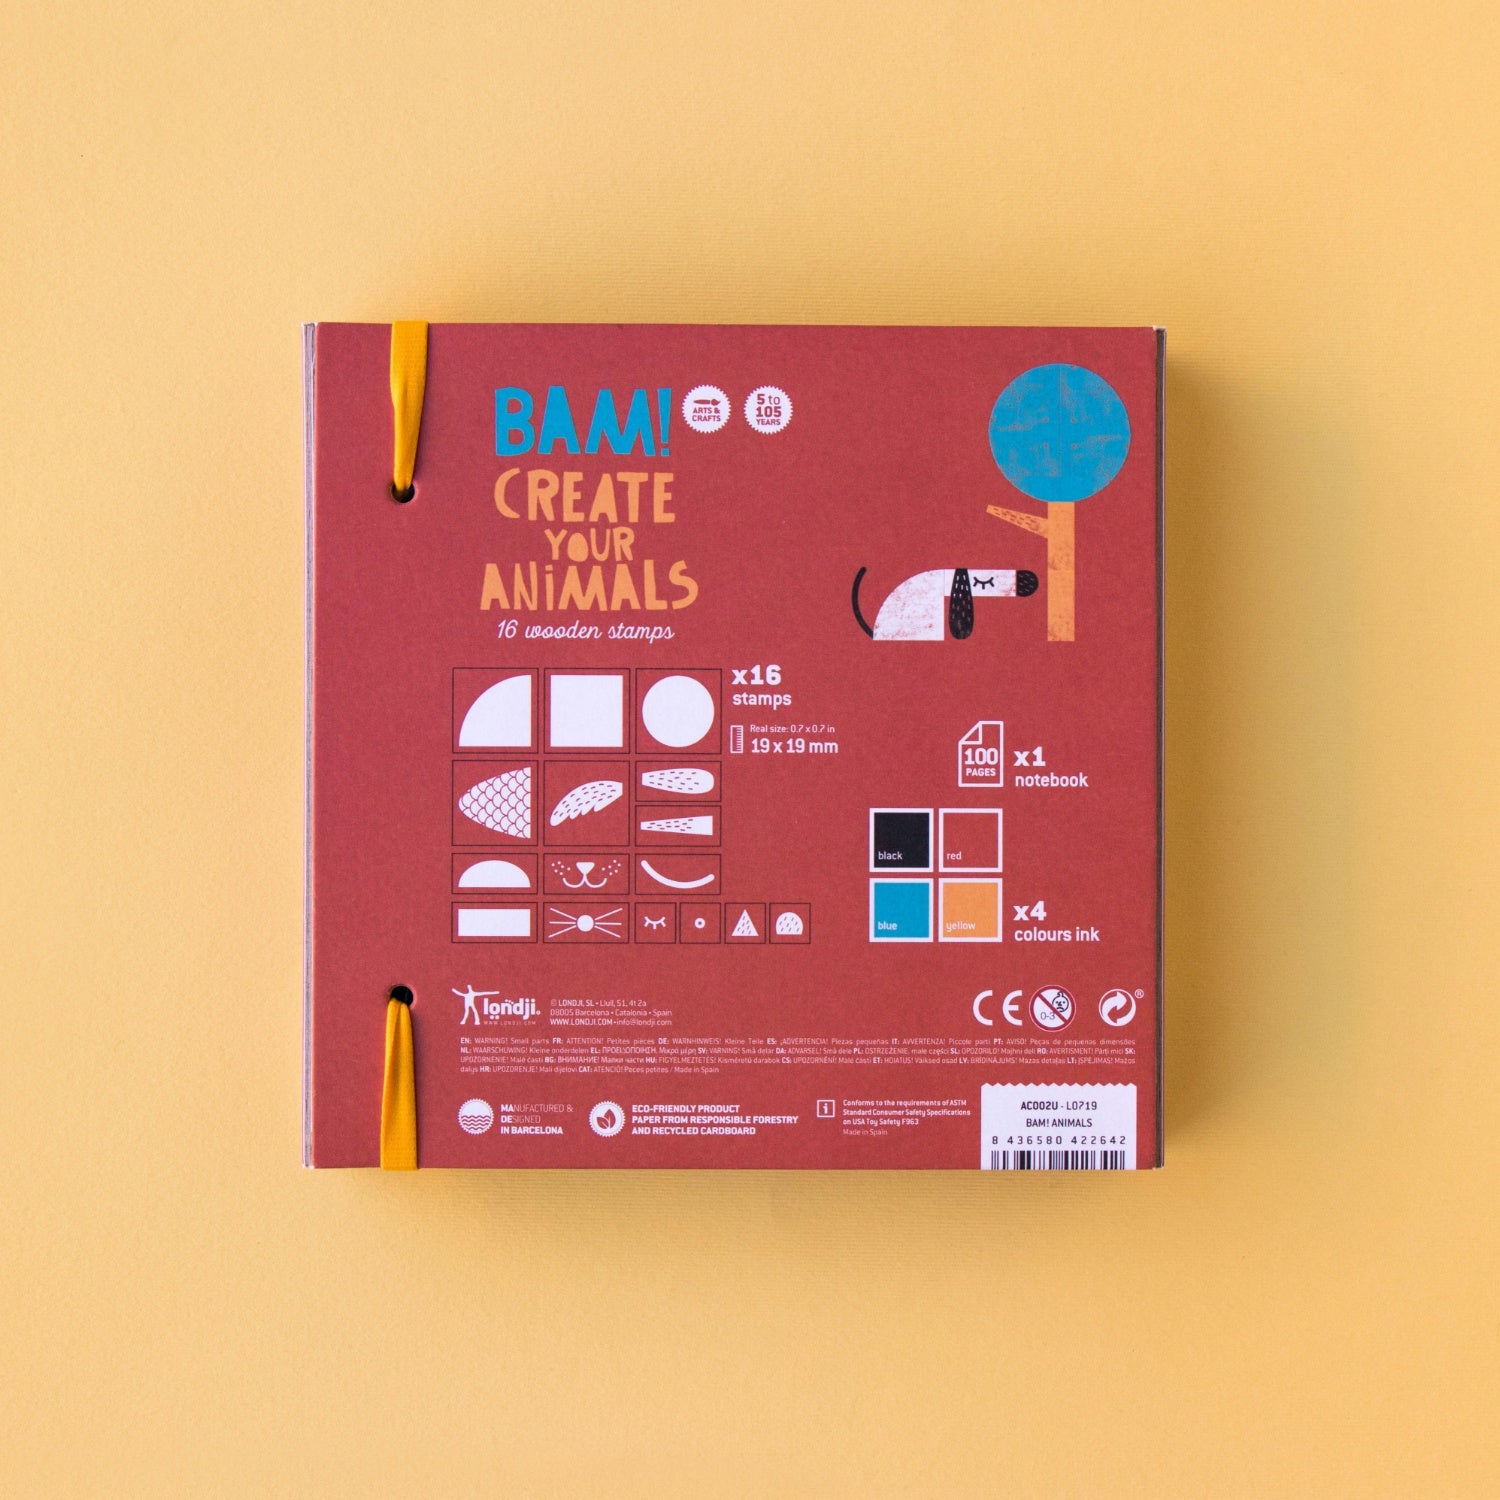 Londji BAM! ANIMALS Stamp Set | Creativity Stamp Set for Kids | Box Back | BeoVERDE.ie